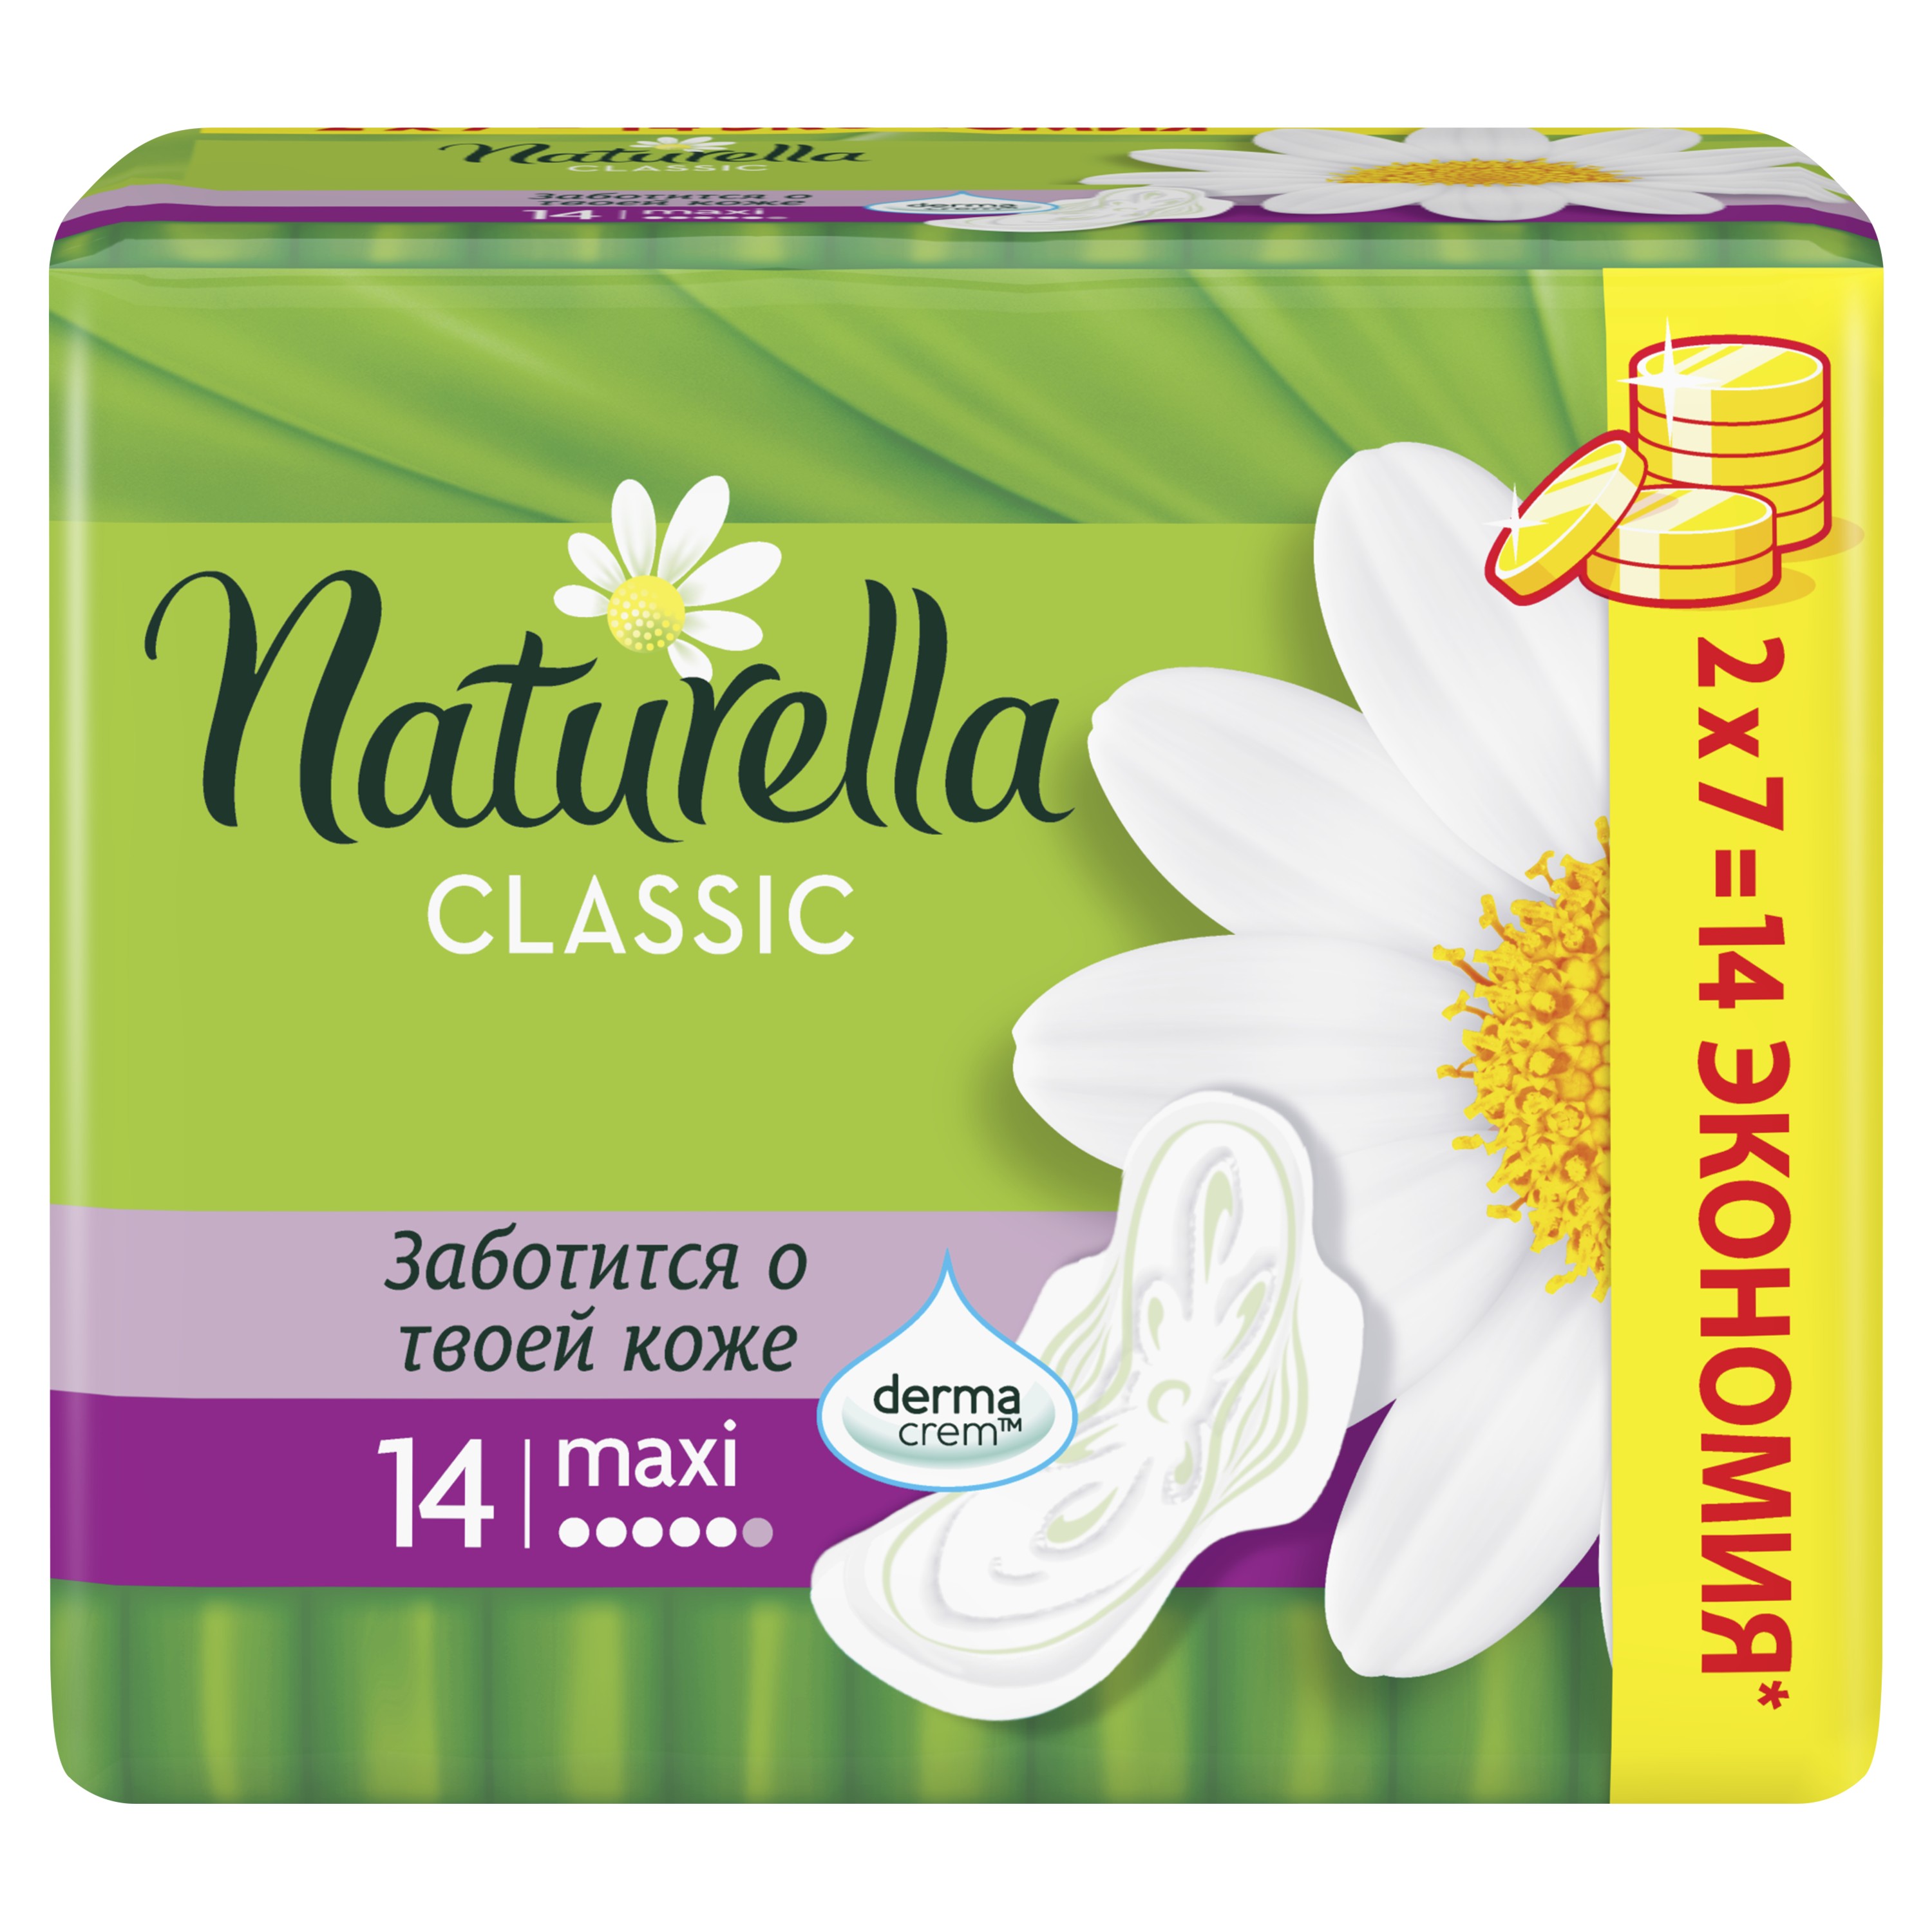 Прокладки натурелла купить. Прокладки Натурелла Классик. Naturella Classic Maxi. Прокладки Naturella Classic ароматизир с крылышками Camomile Maxi Duo 14шт. Naturella Classic Maxi 14.